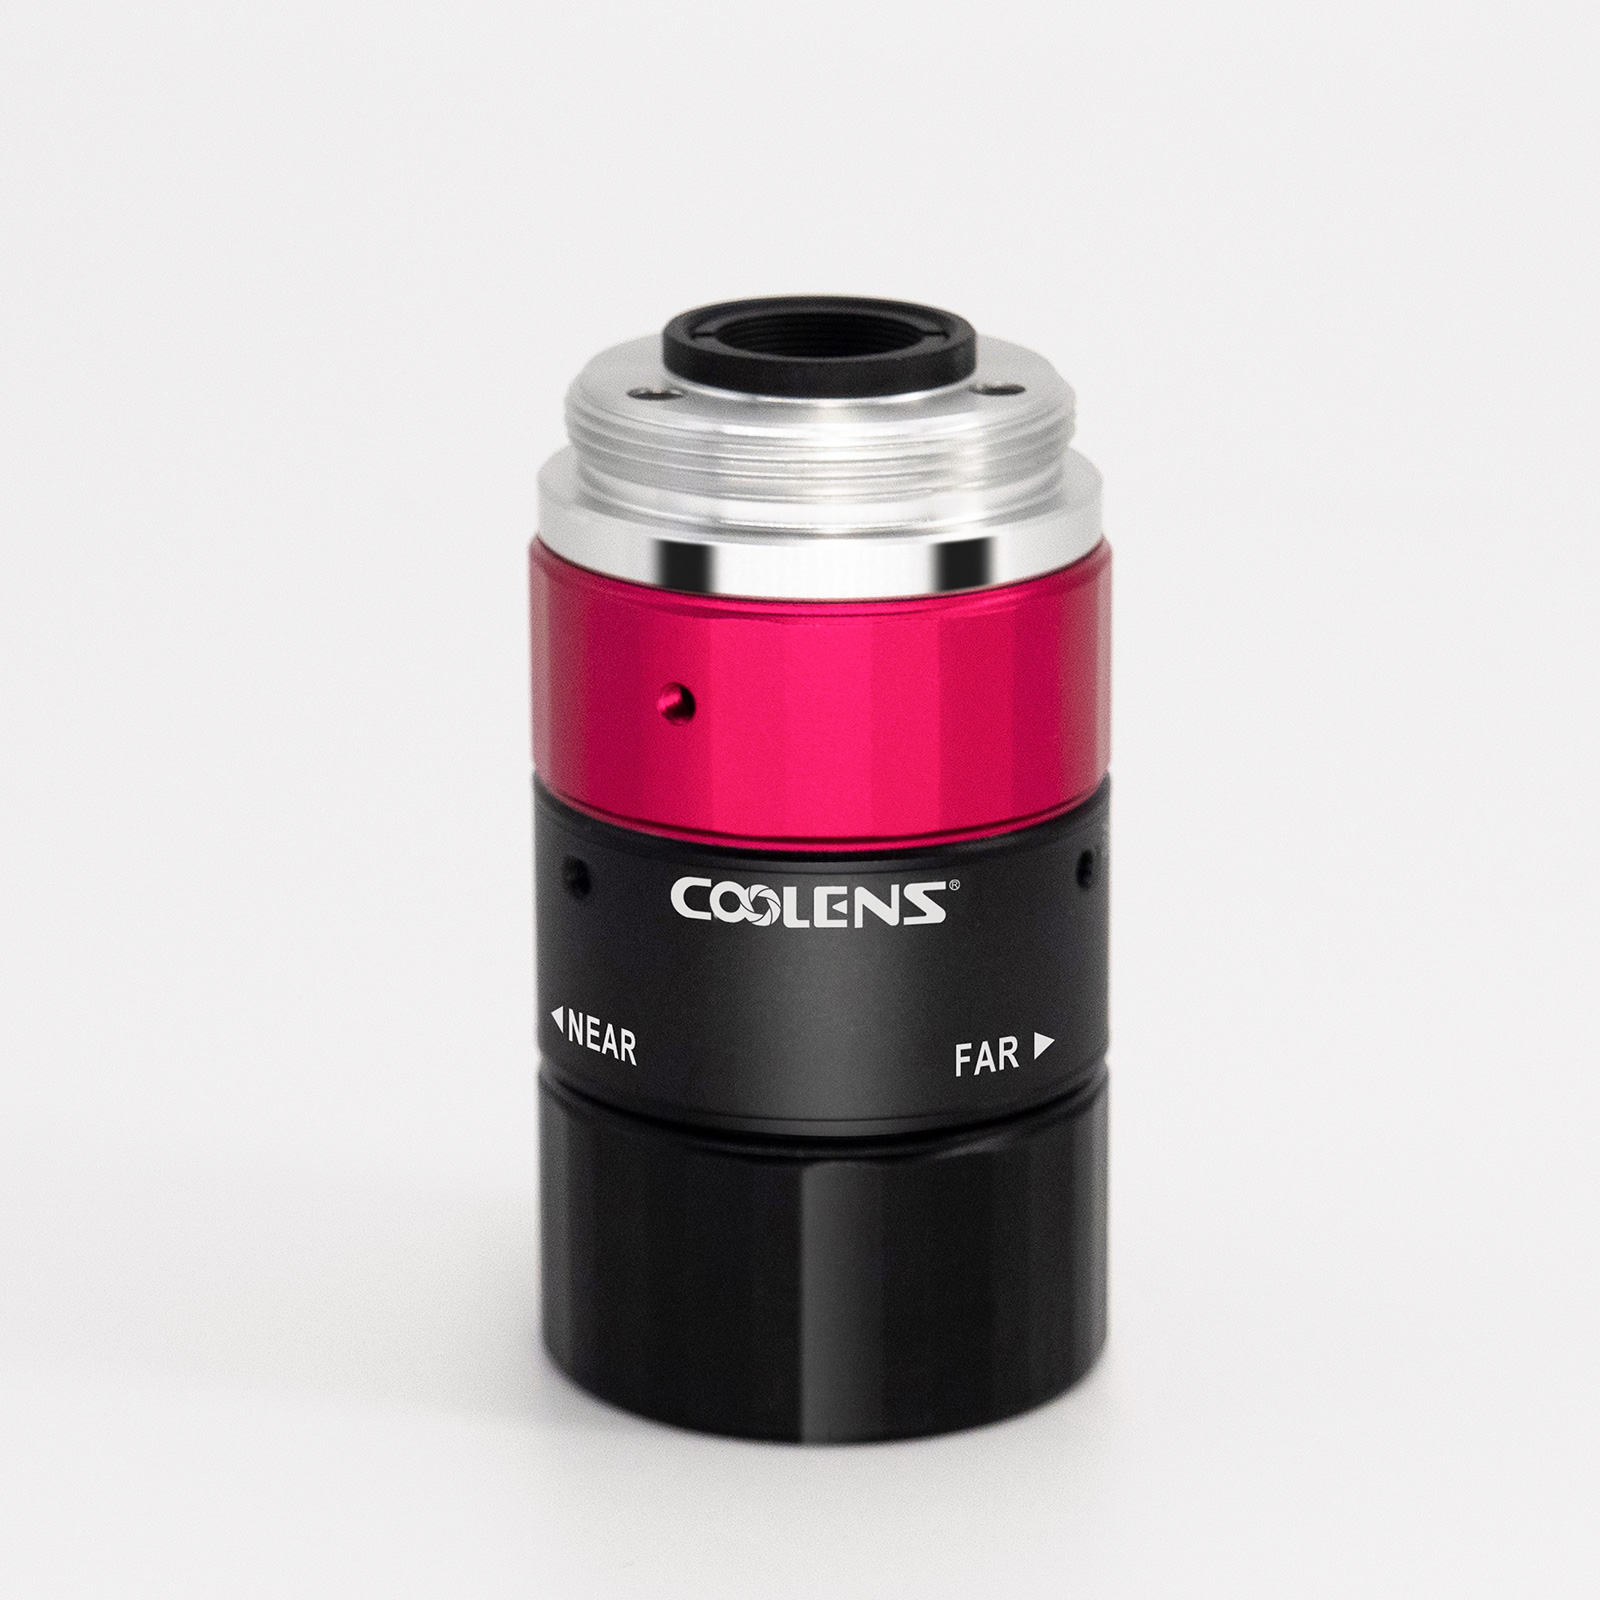 1/1.8" f35 Fixed Focus Lens